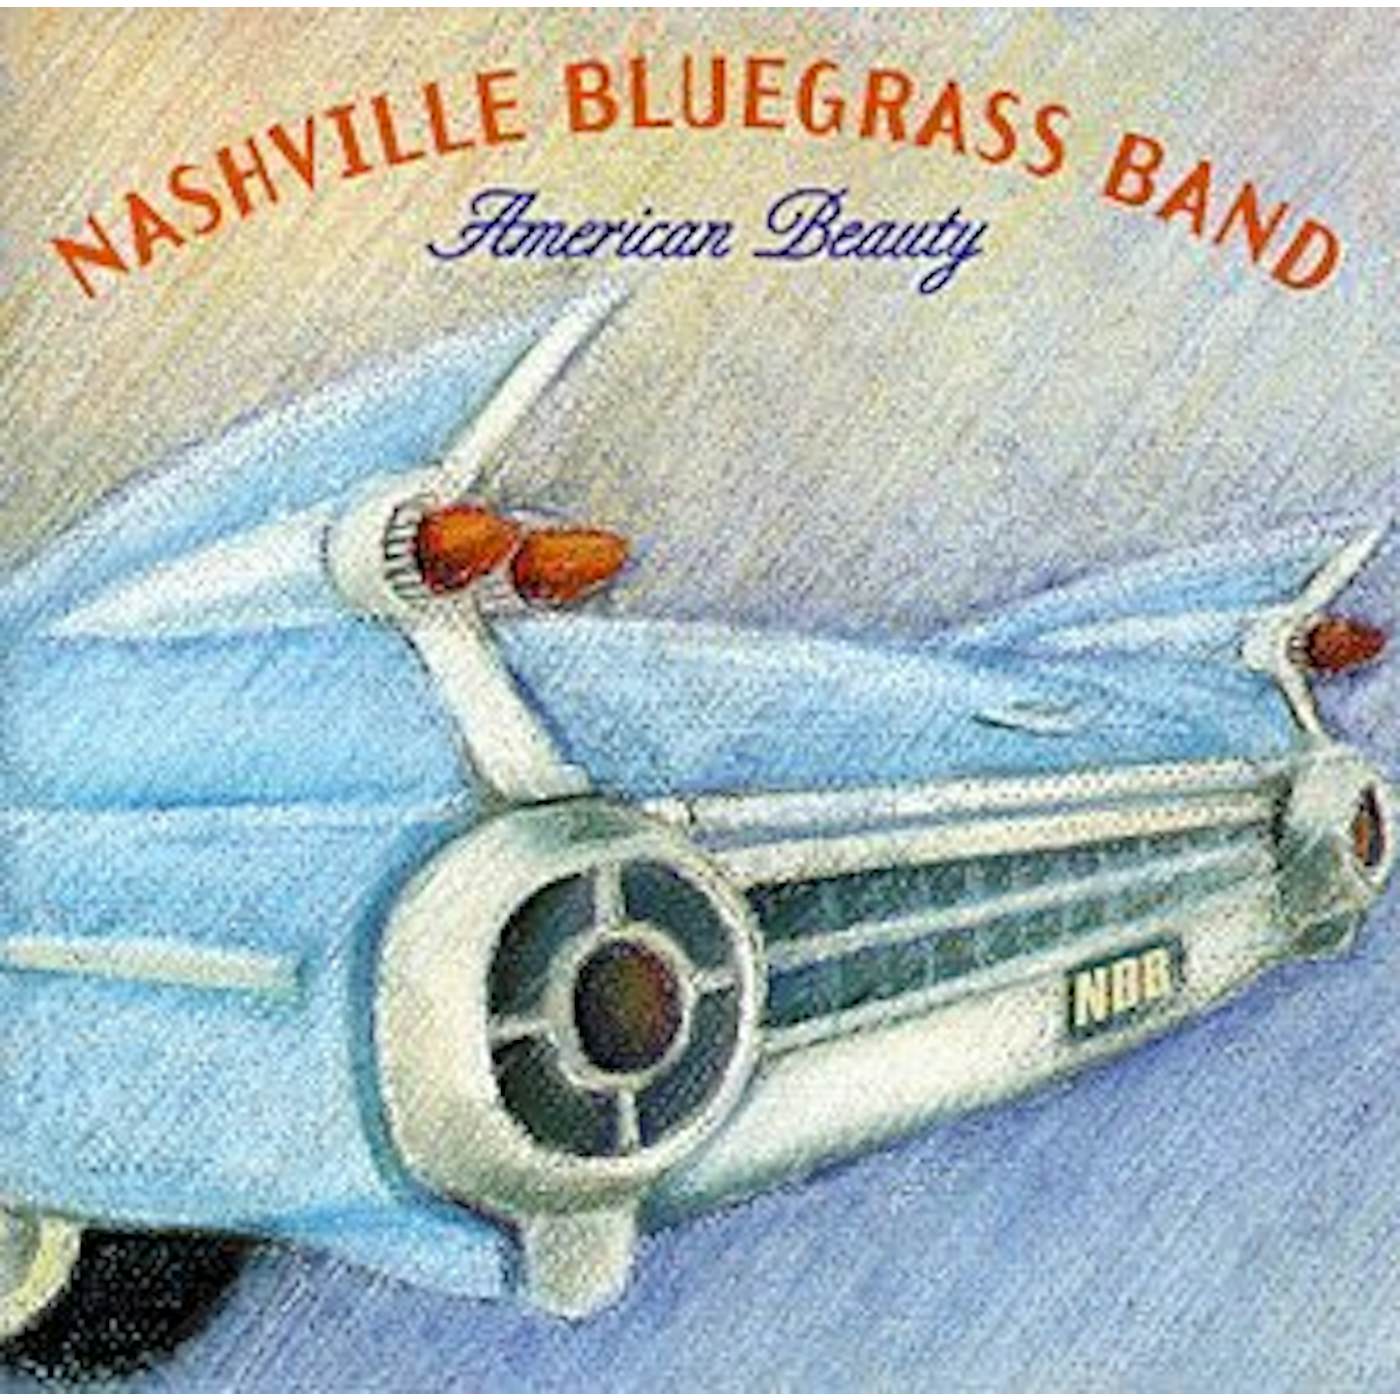 The Nashville Bluegrass Band AMERICAN BEAUTY CD